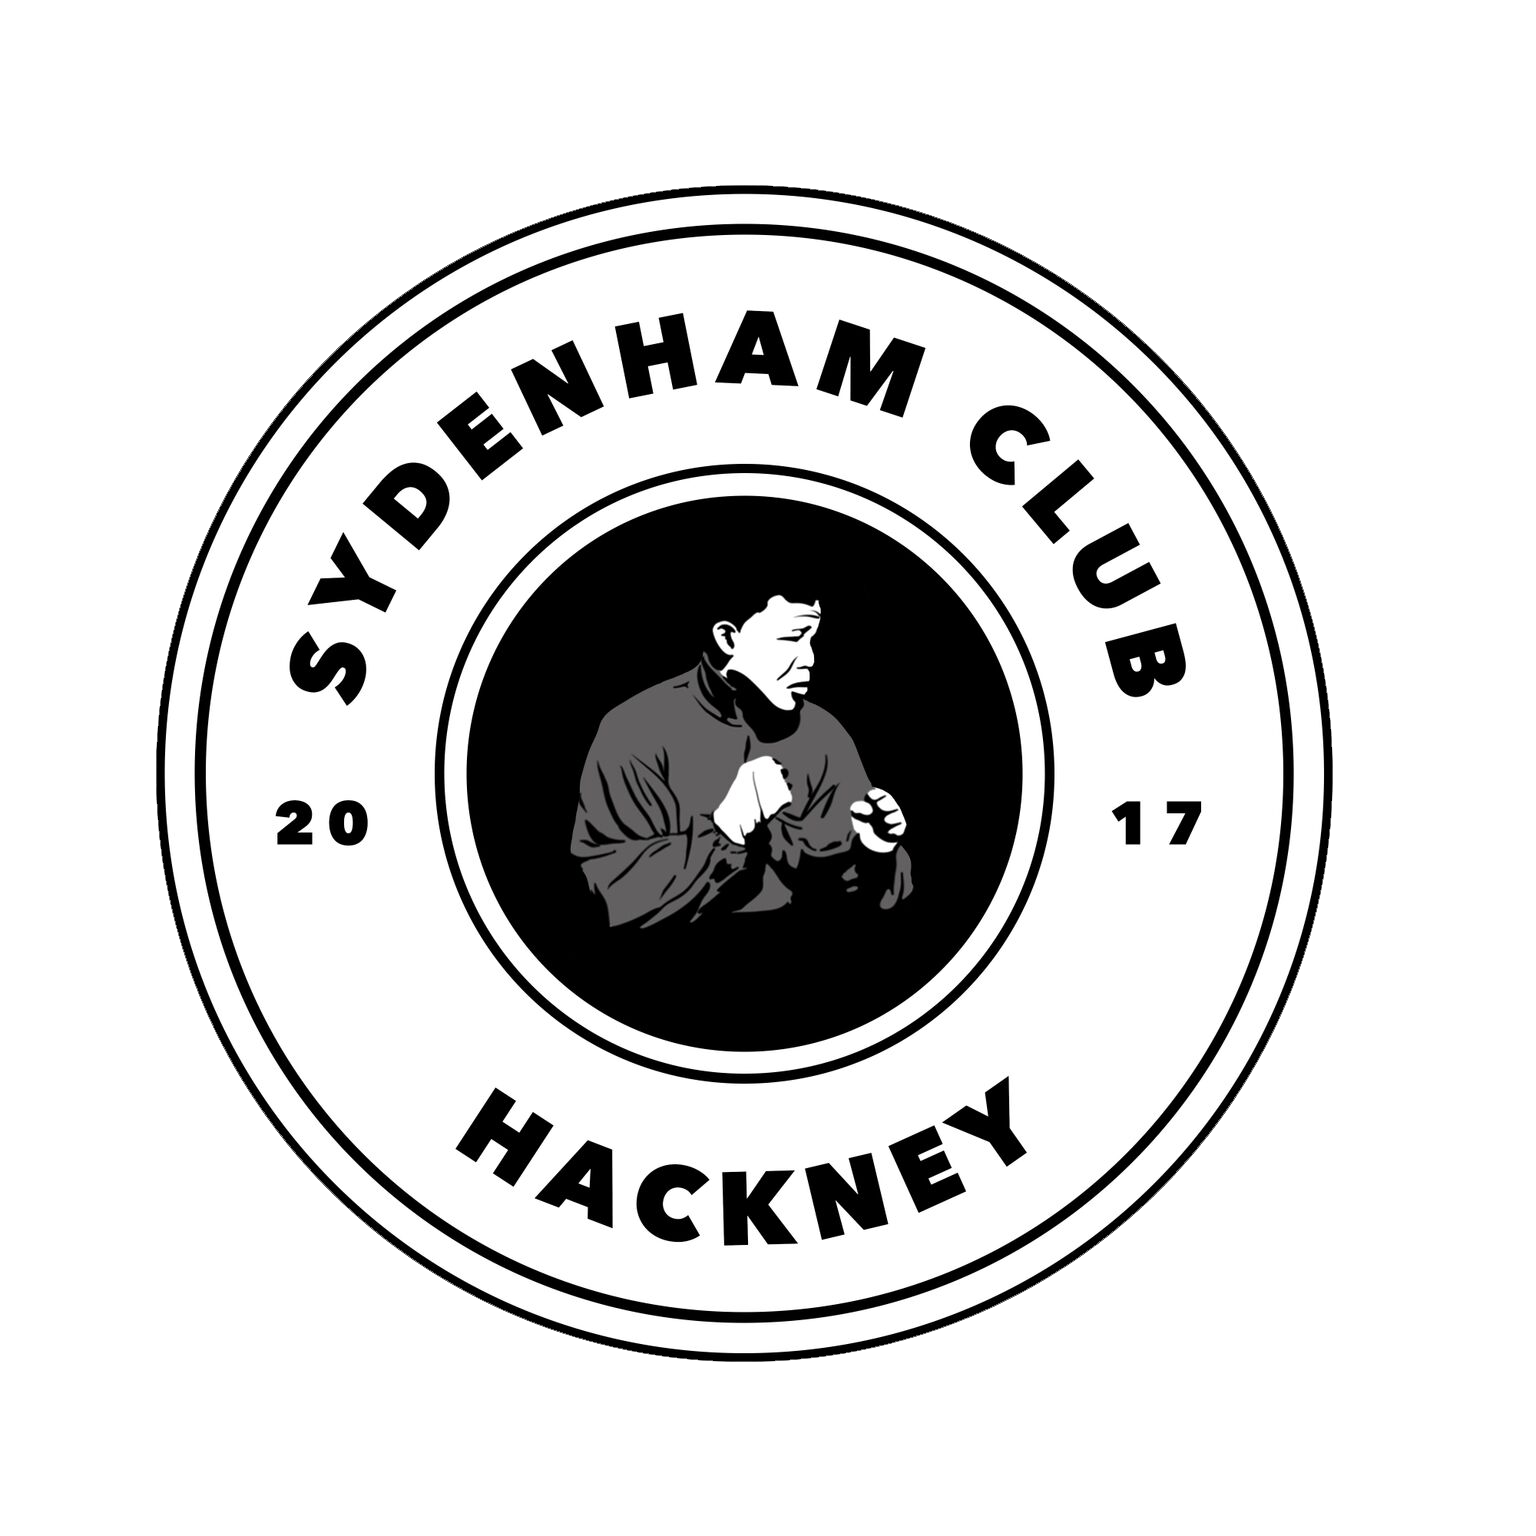  Sydenham|Club